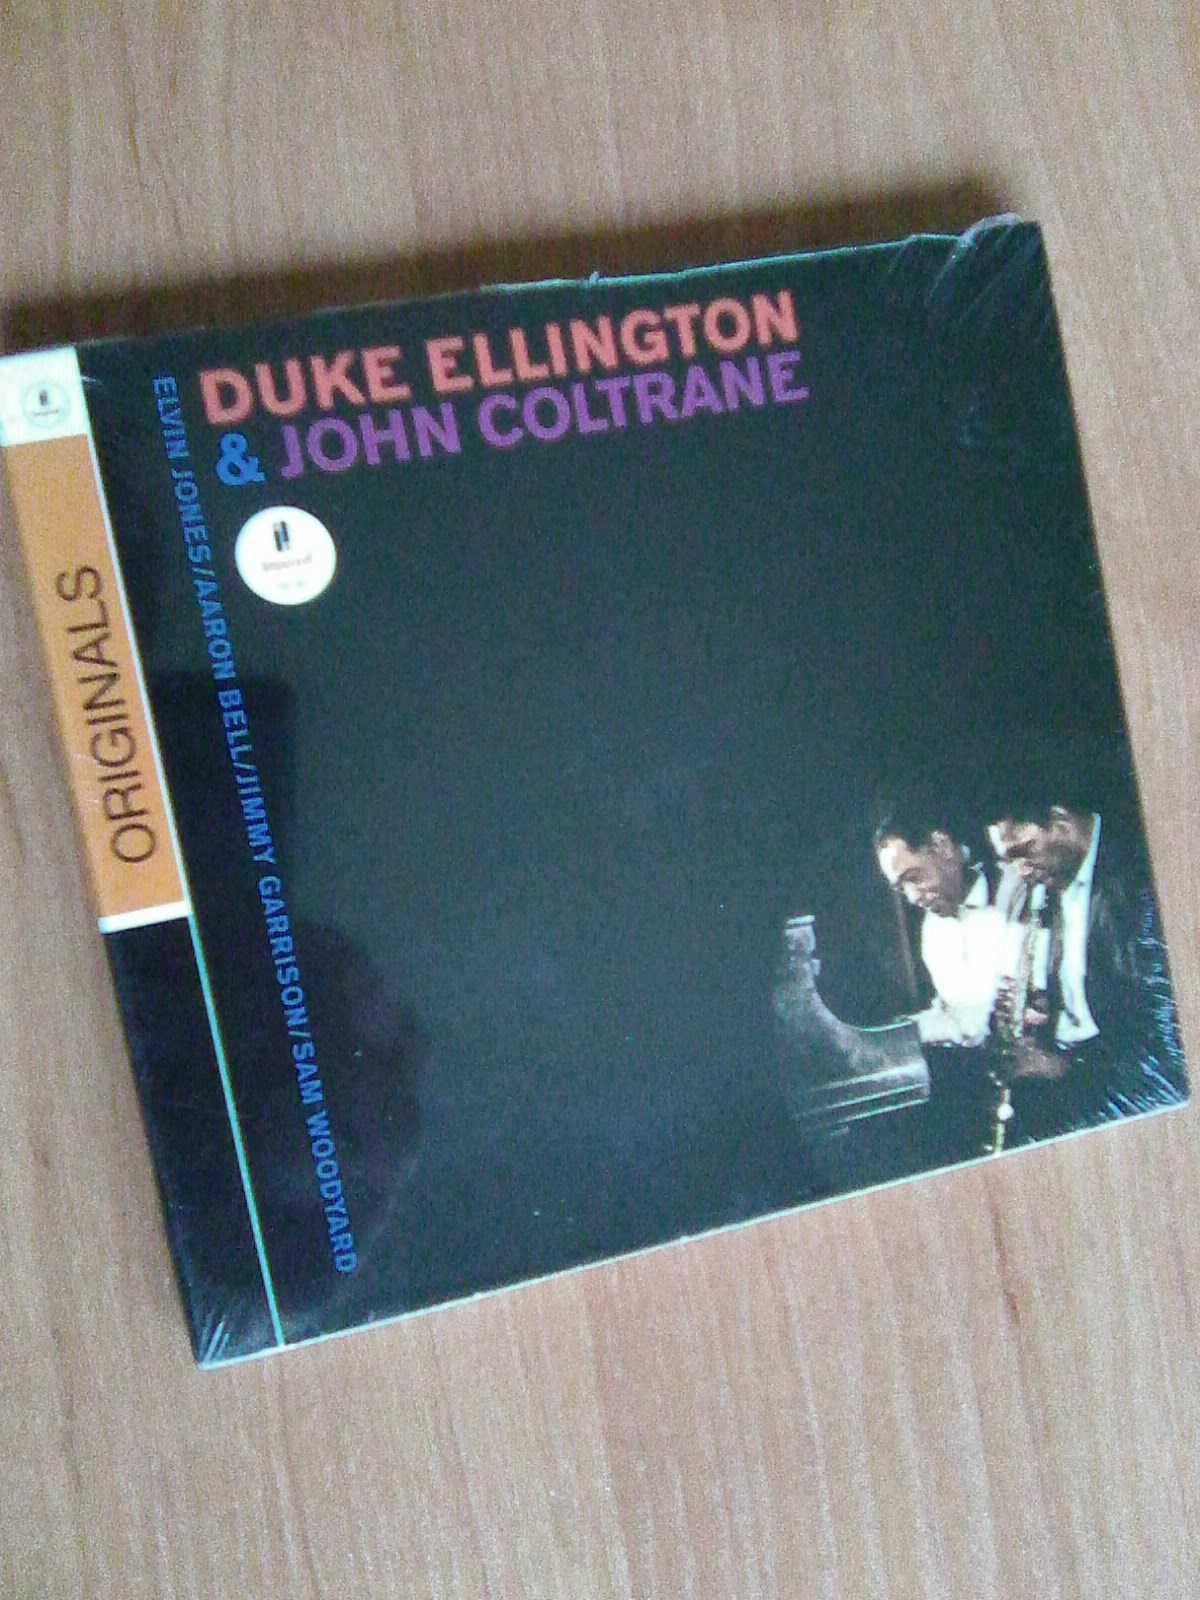 John Coltrane - Duke Ellington John Coltrane